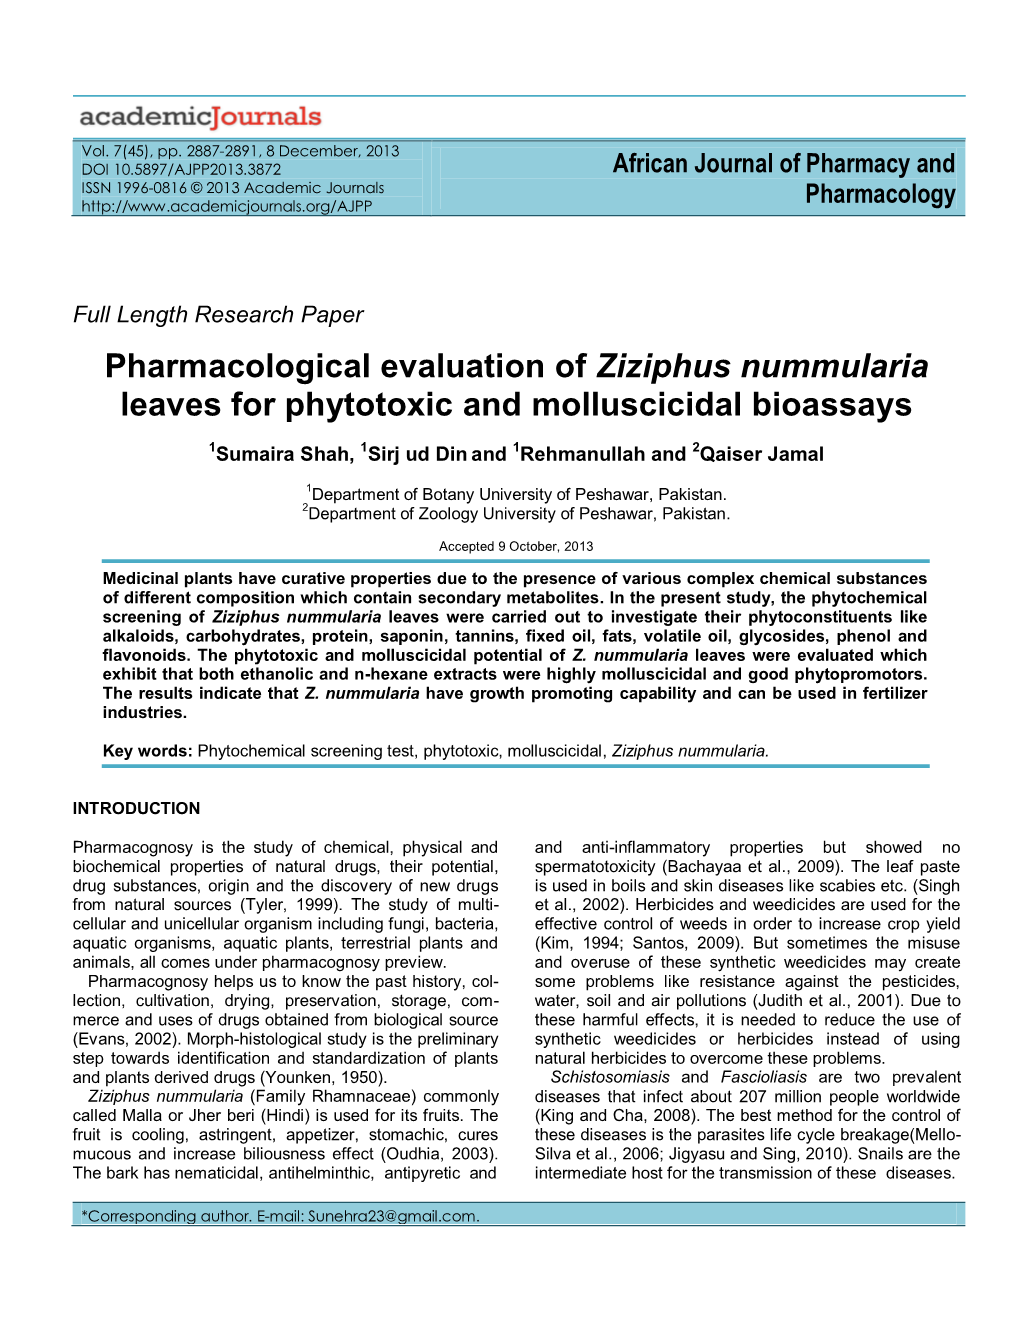 Pharmacological Evaluation of Ziziphus Nummularia Leaves for Phytotoxic and Molluscicidal Bioassays